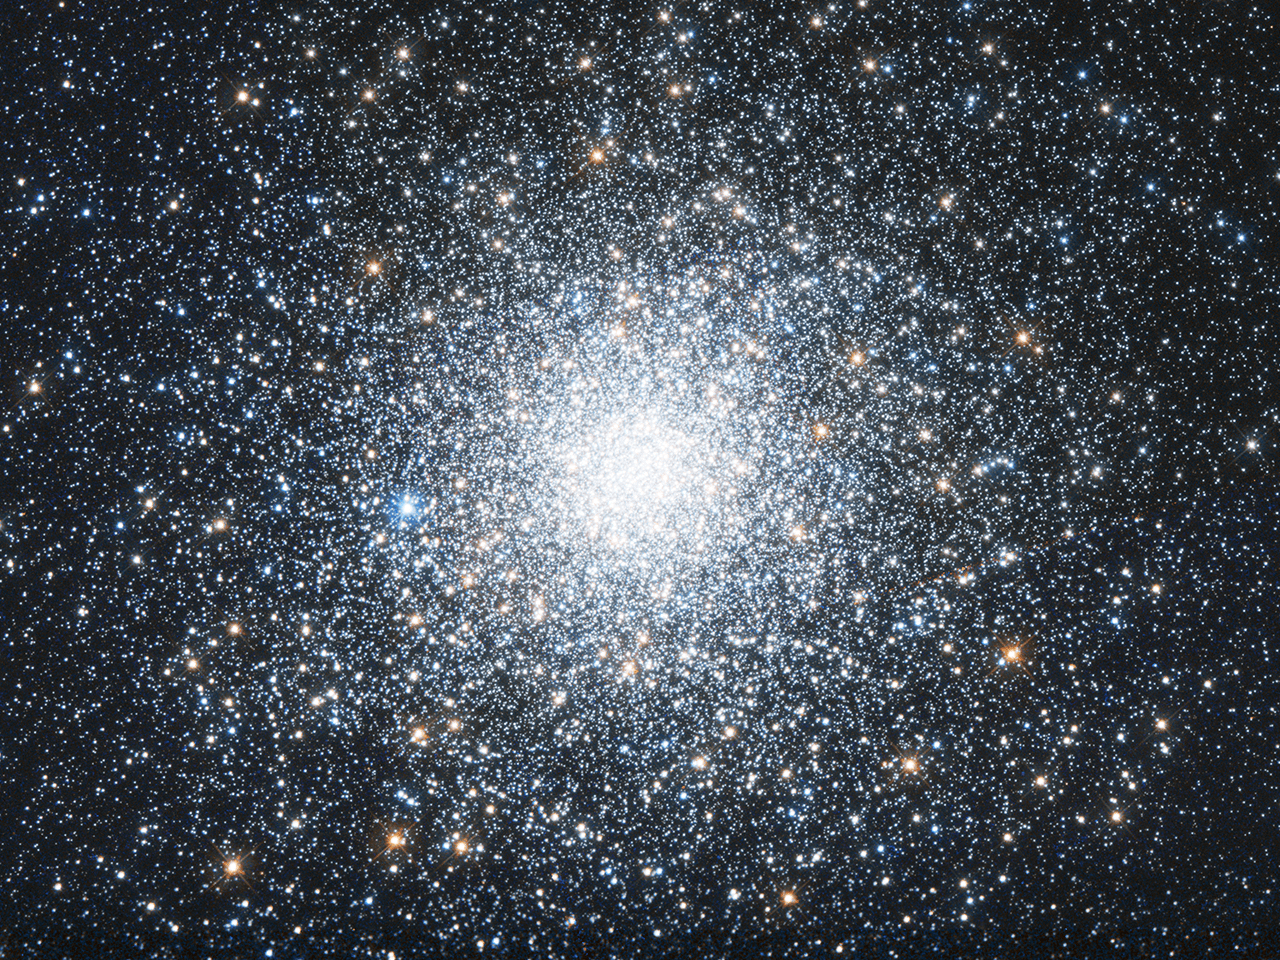 Hubble image of m75